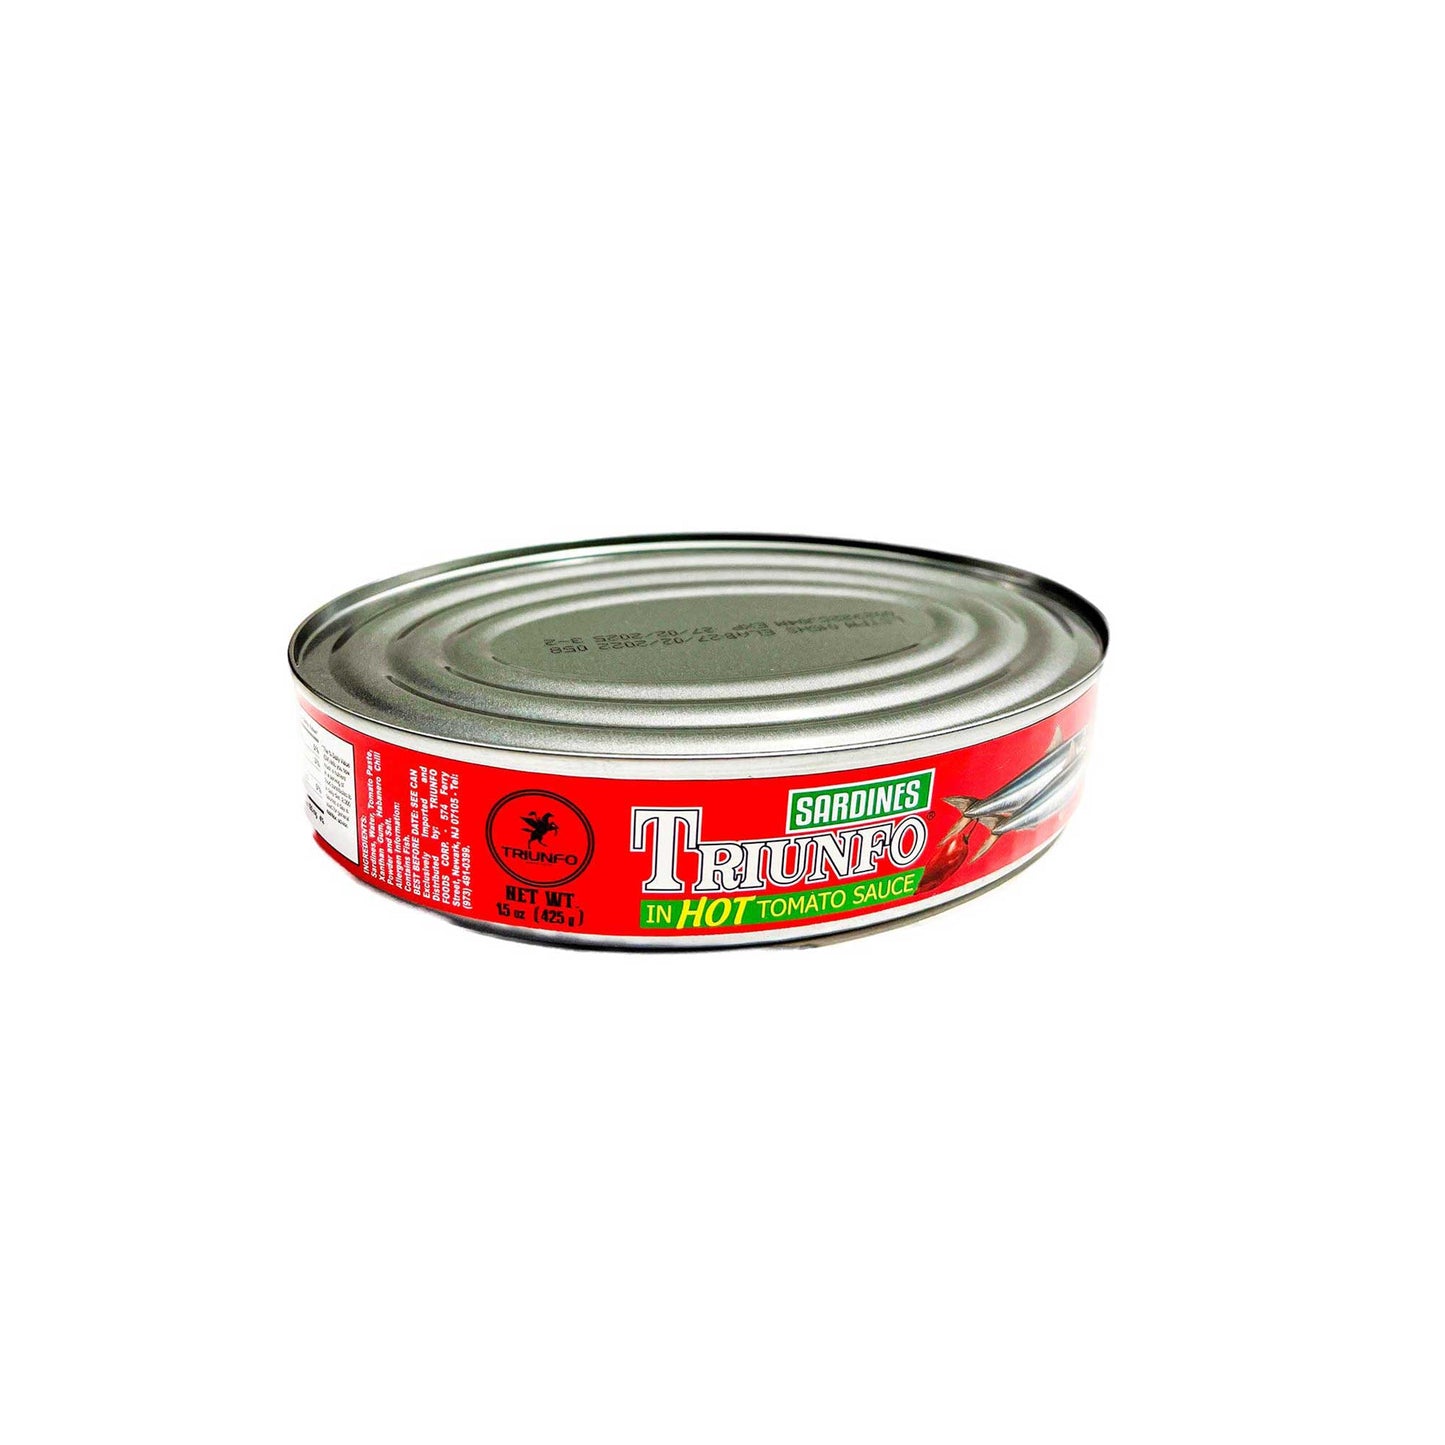 Triunfo sardines ovalk tomate spice